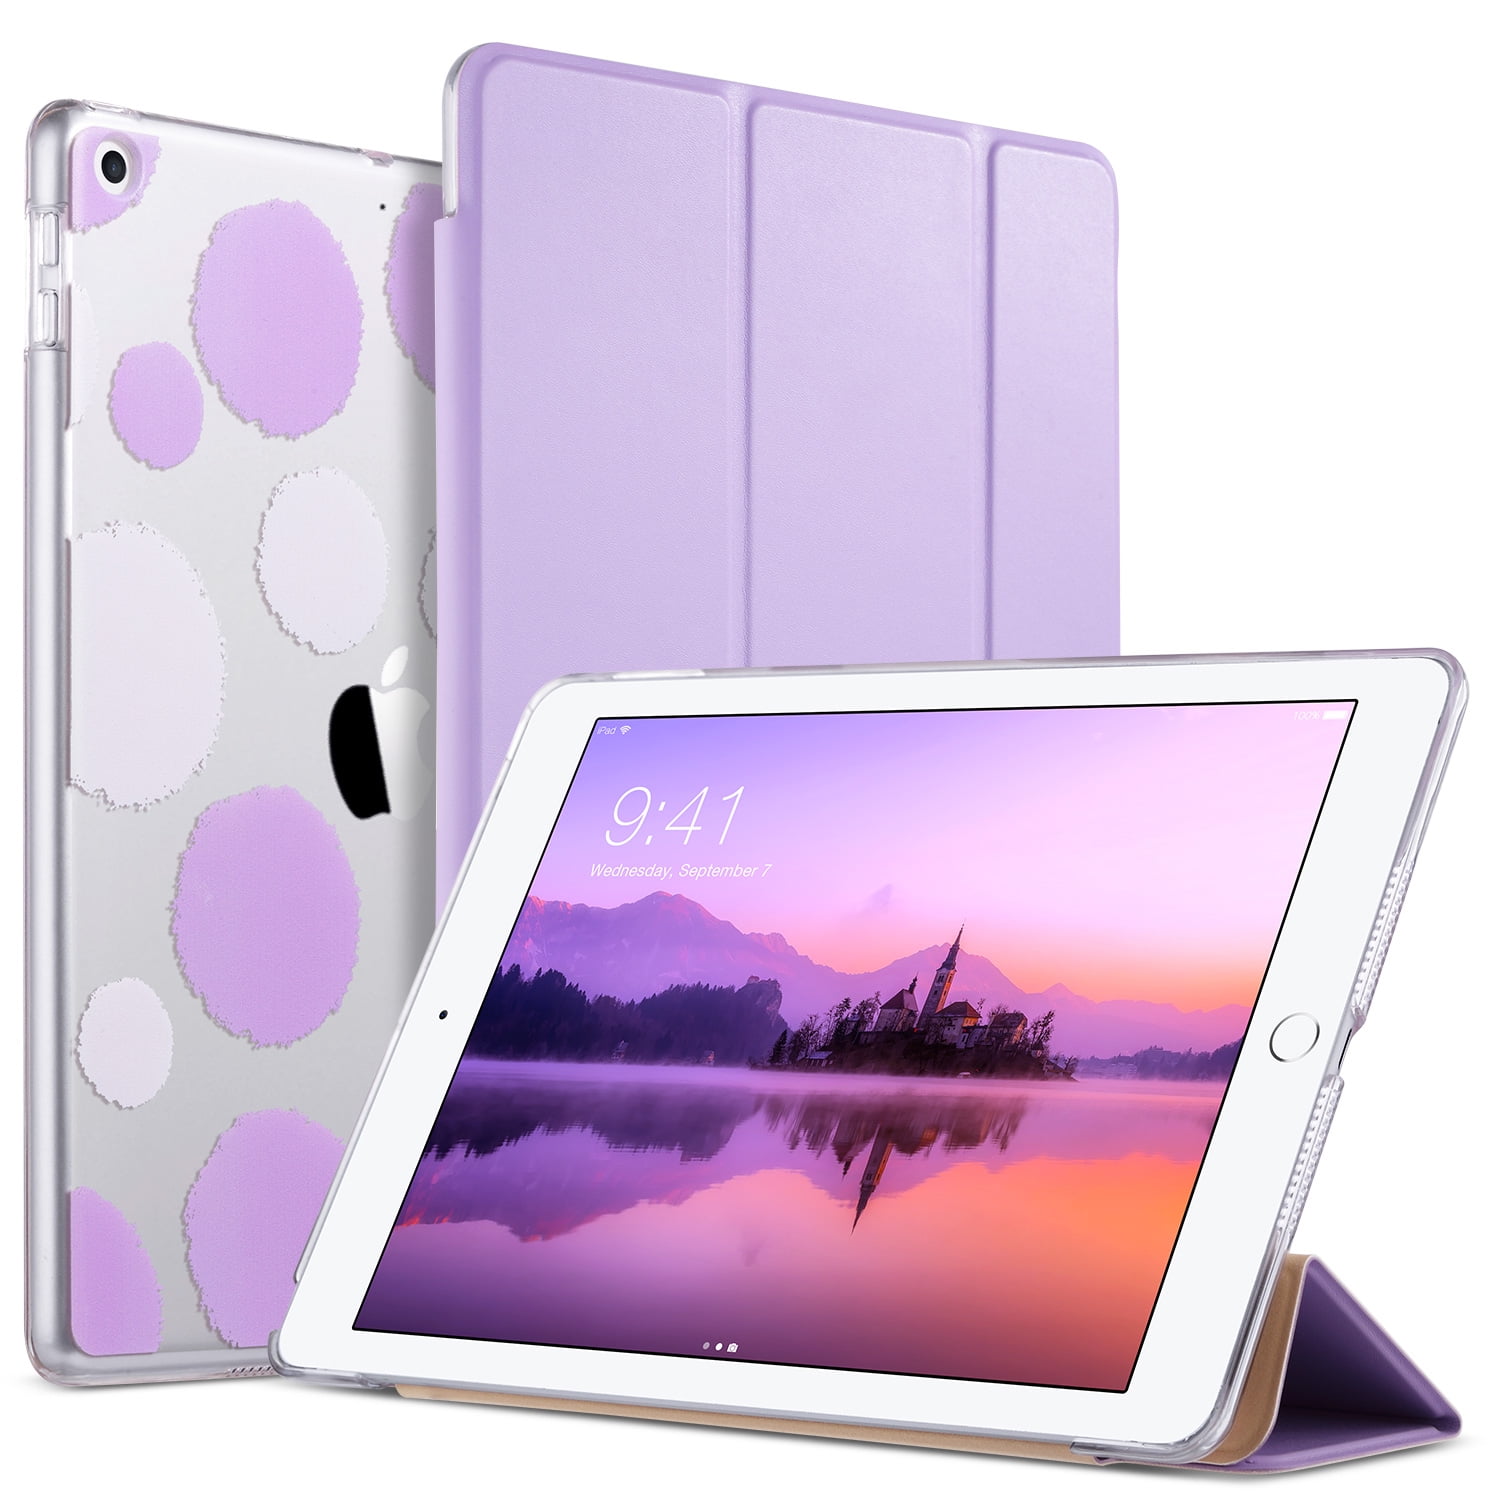 ULAK Case iPad 6th Generation, iPad 5th Generation Case, Slim Trifold Smart Stand Cover for Apple iPad 9.7 inch 2017/2018 Released, Purple - Walmart.com